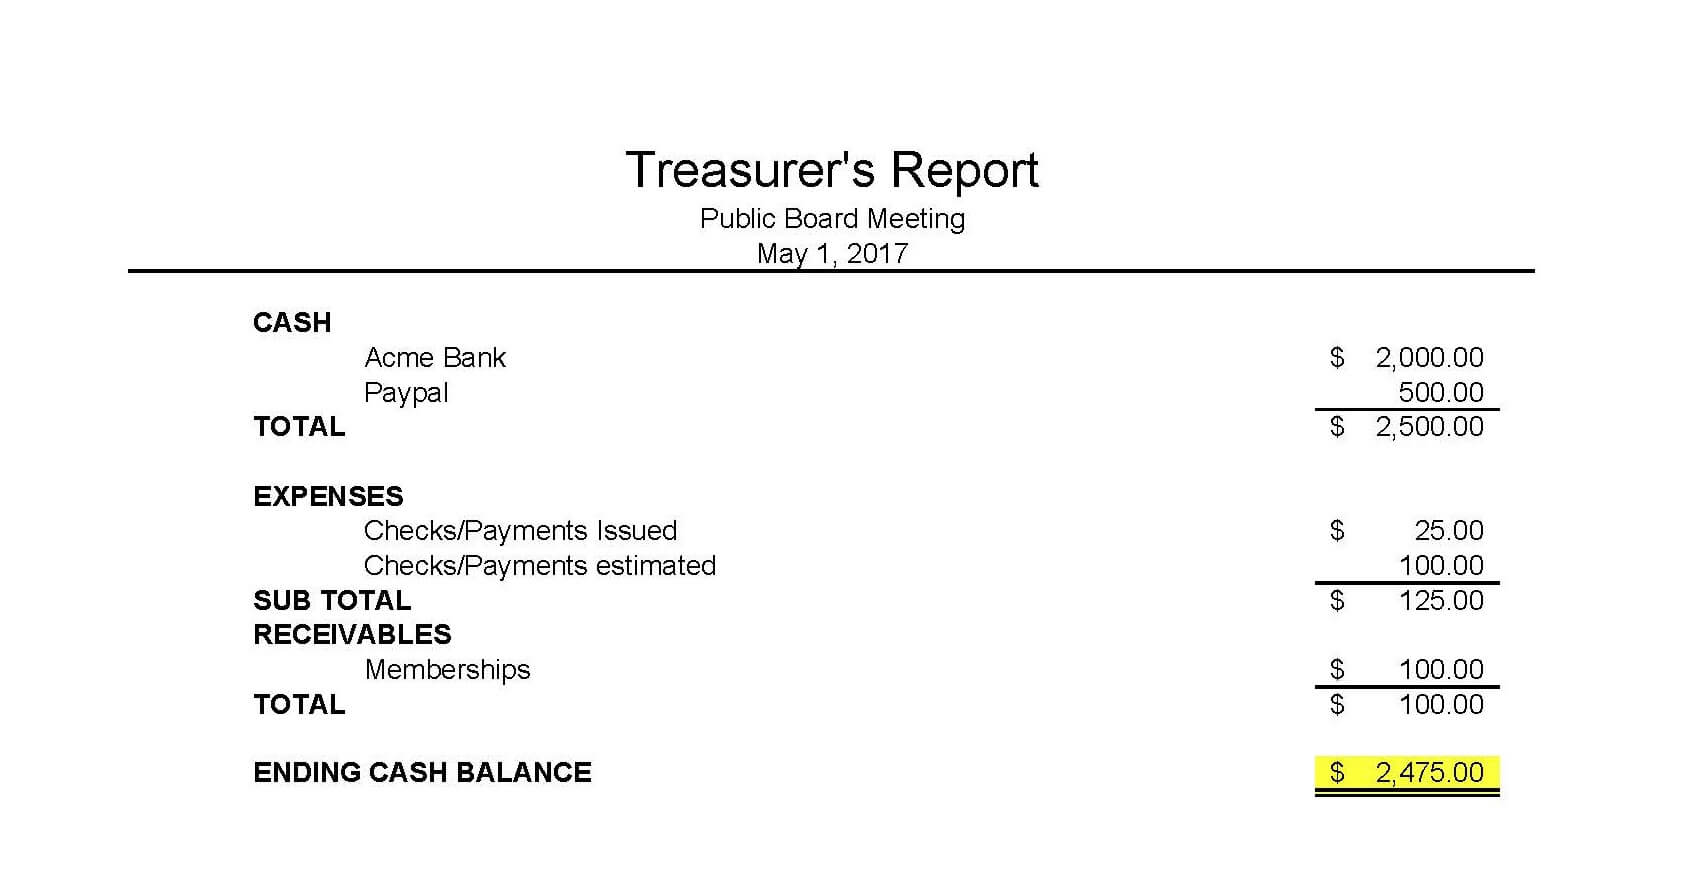 009 Treasurer Report Template Non Profit Sample Club Intended For Treasurer Report Template Non Profit